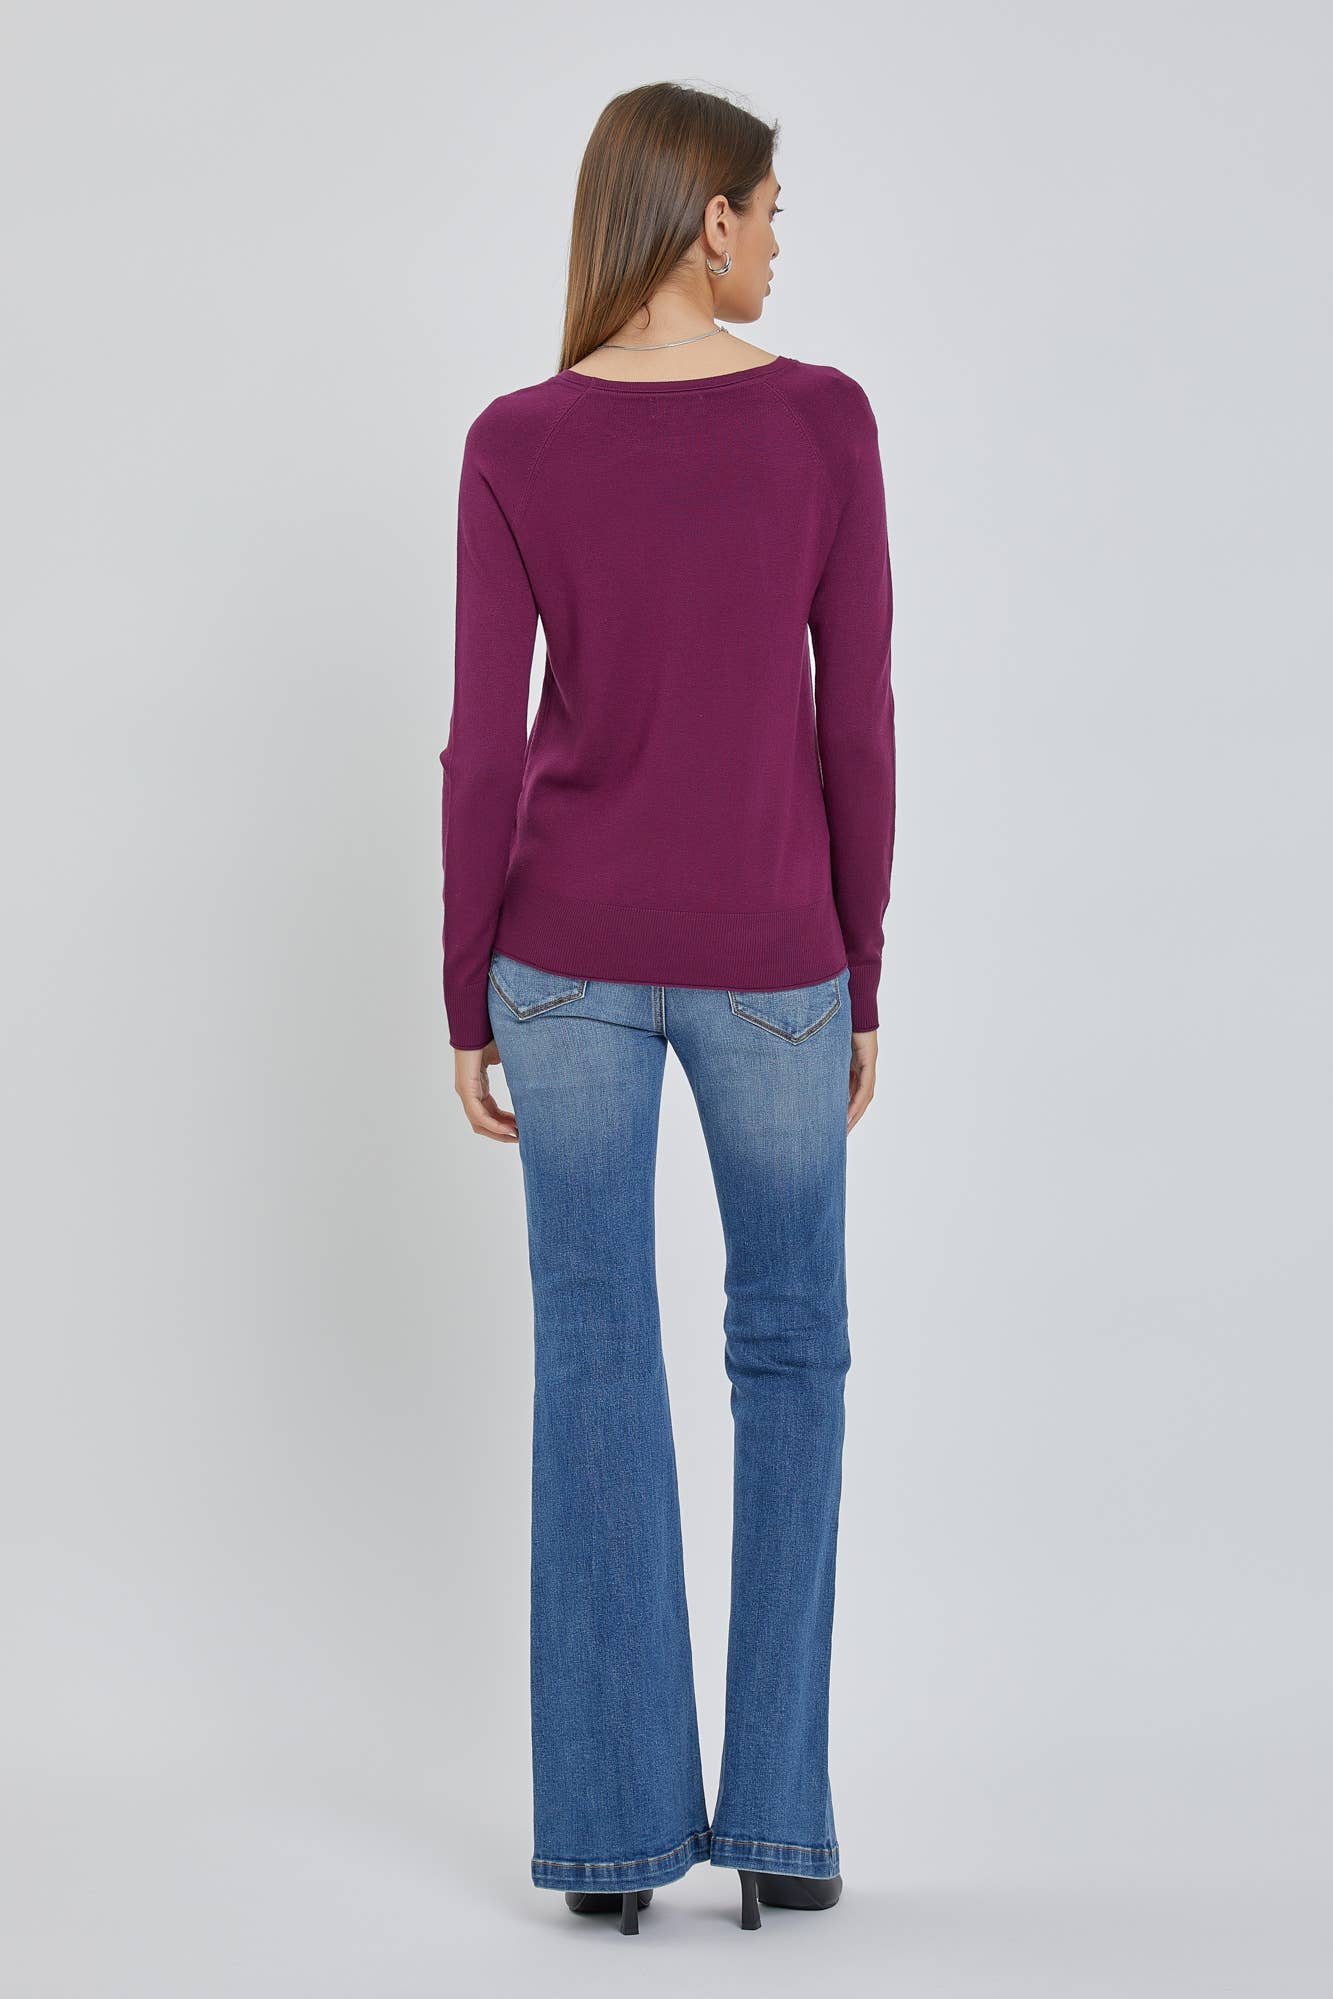 The Camille Sweater: Medium / H. Grey